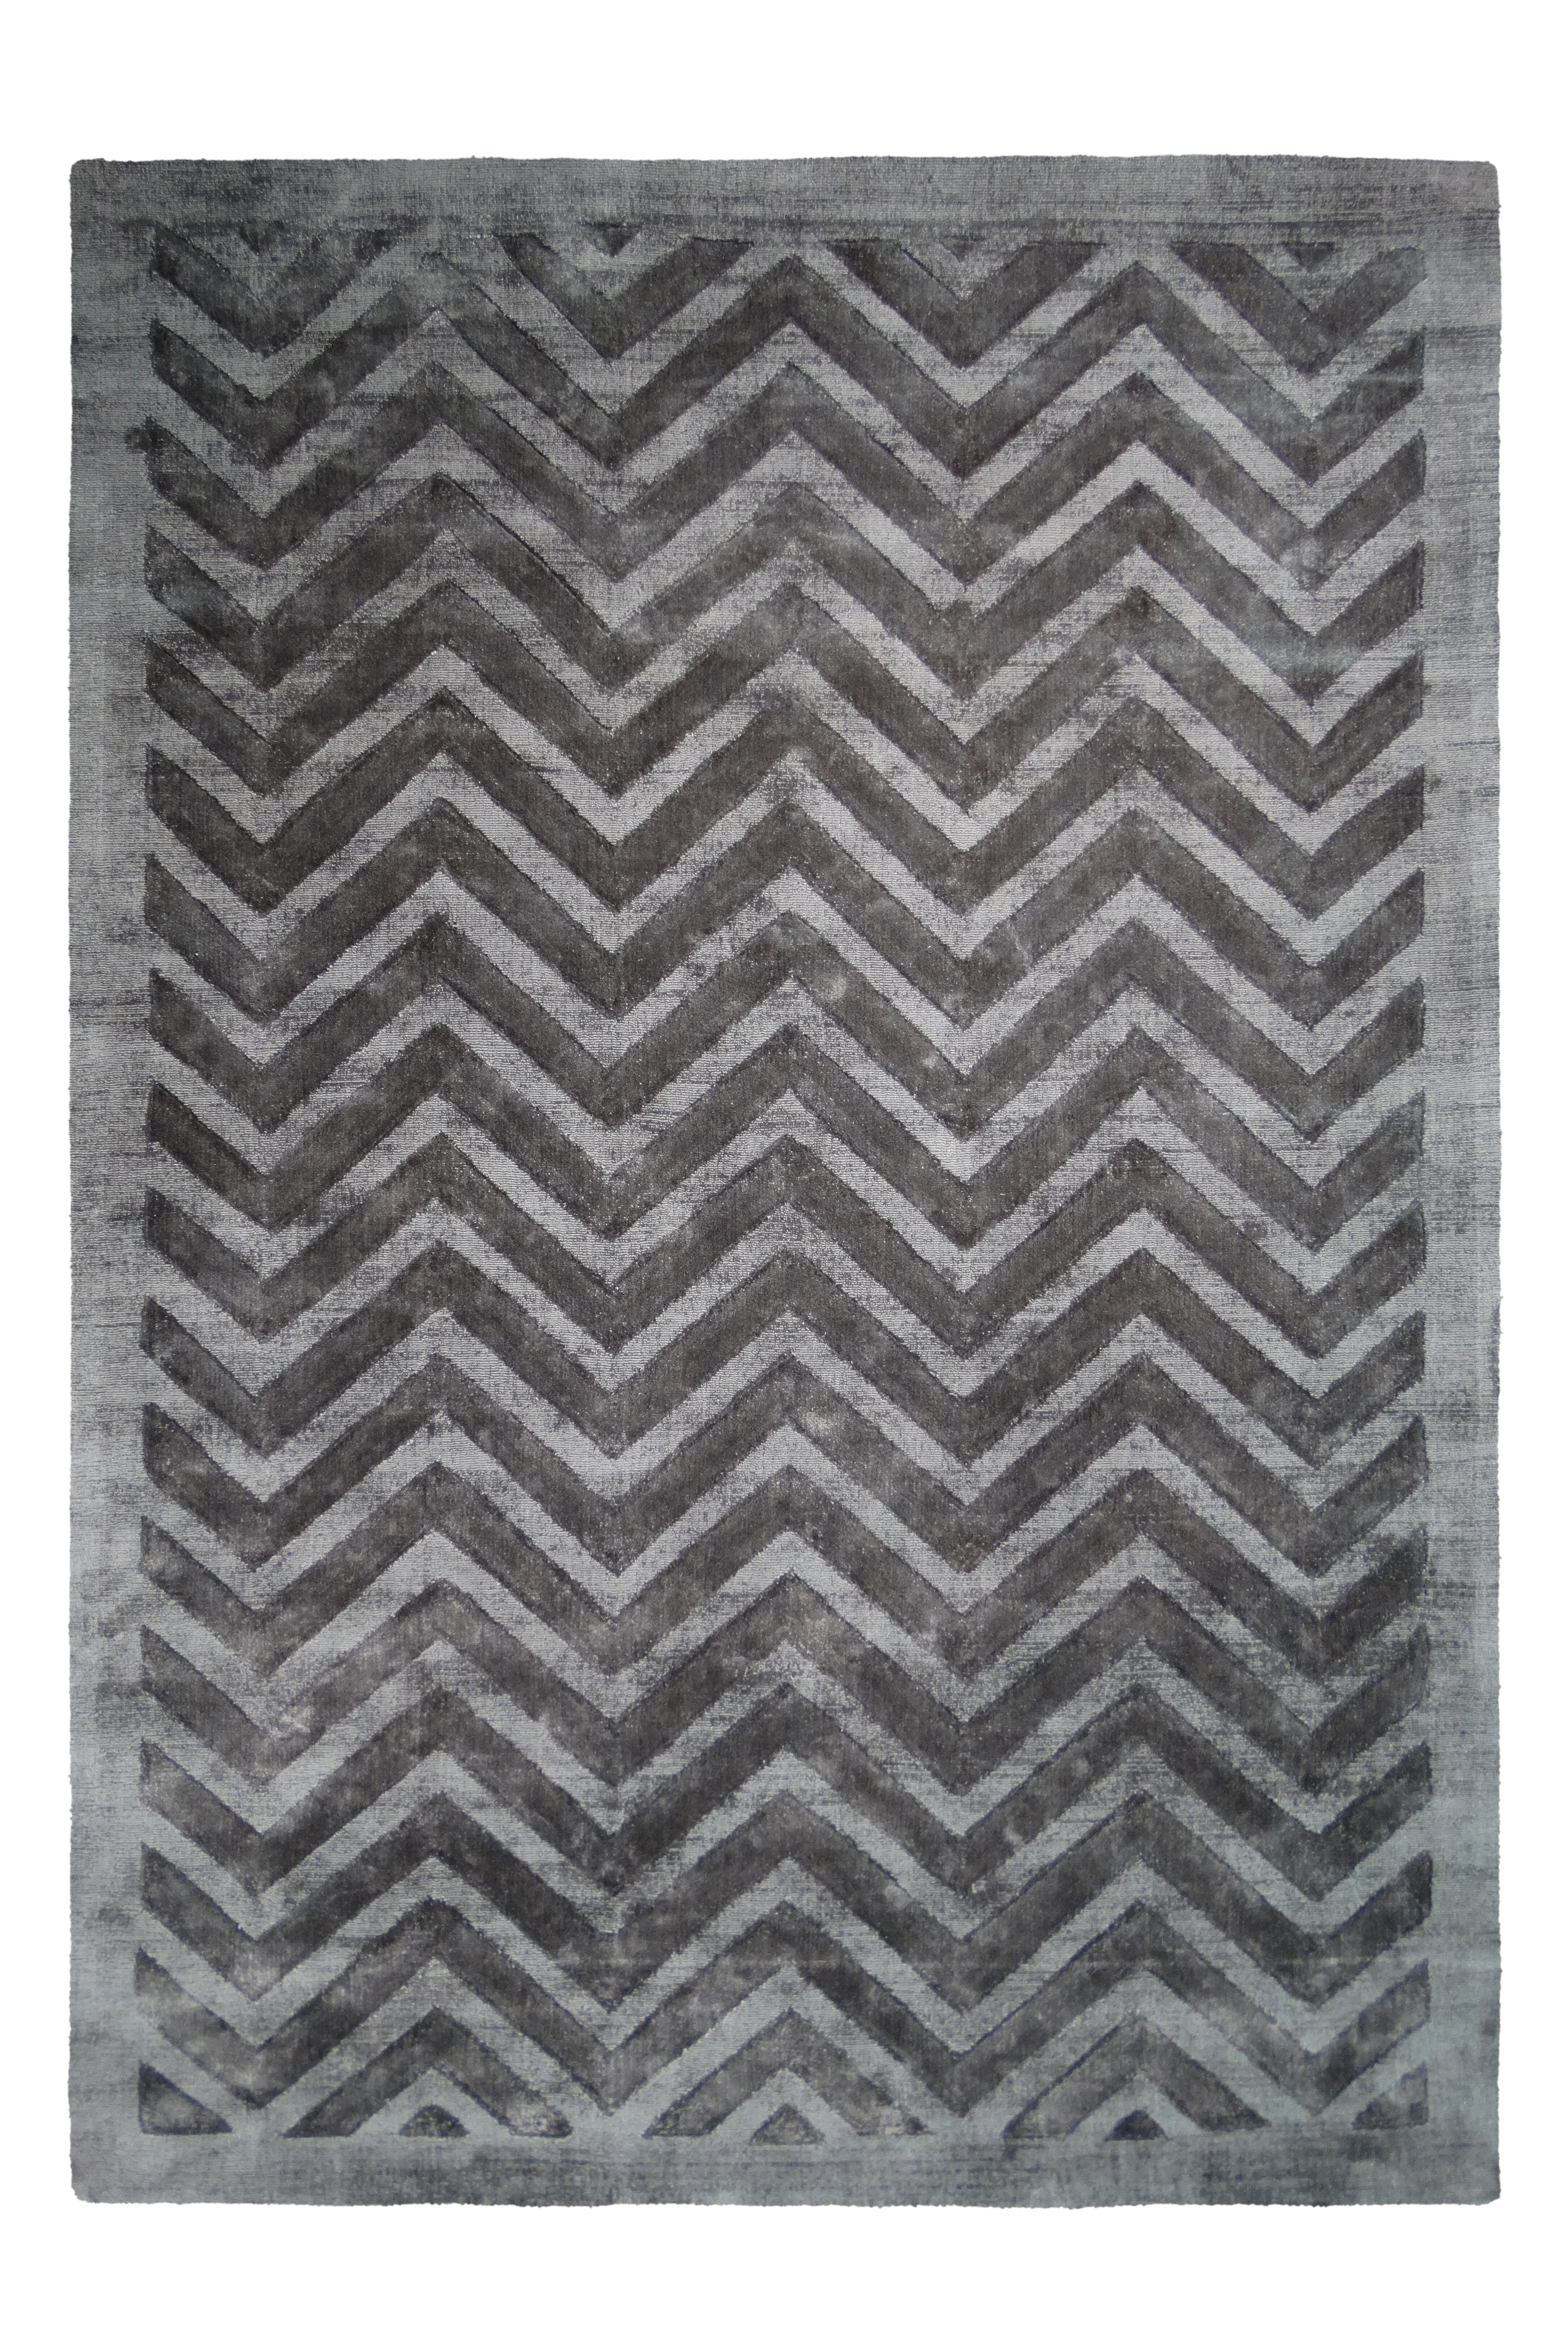 Kayoom Vloerkleed 'Luxury 410' kleur Grijs / Antraciet, 160 x 230cm